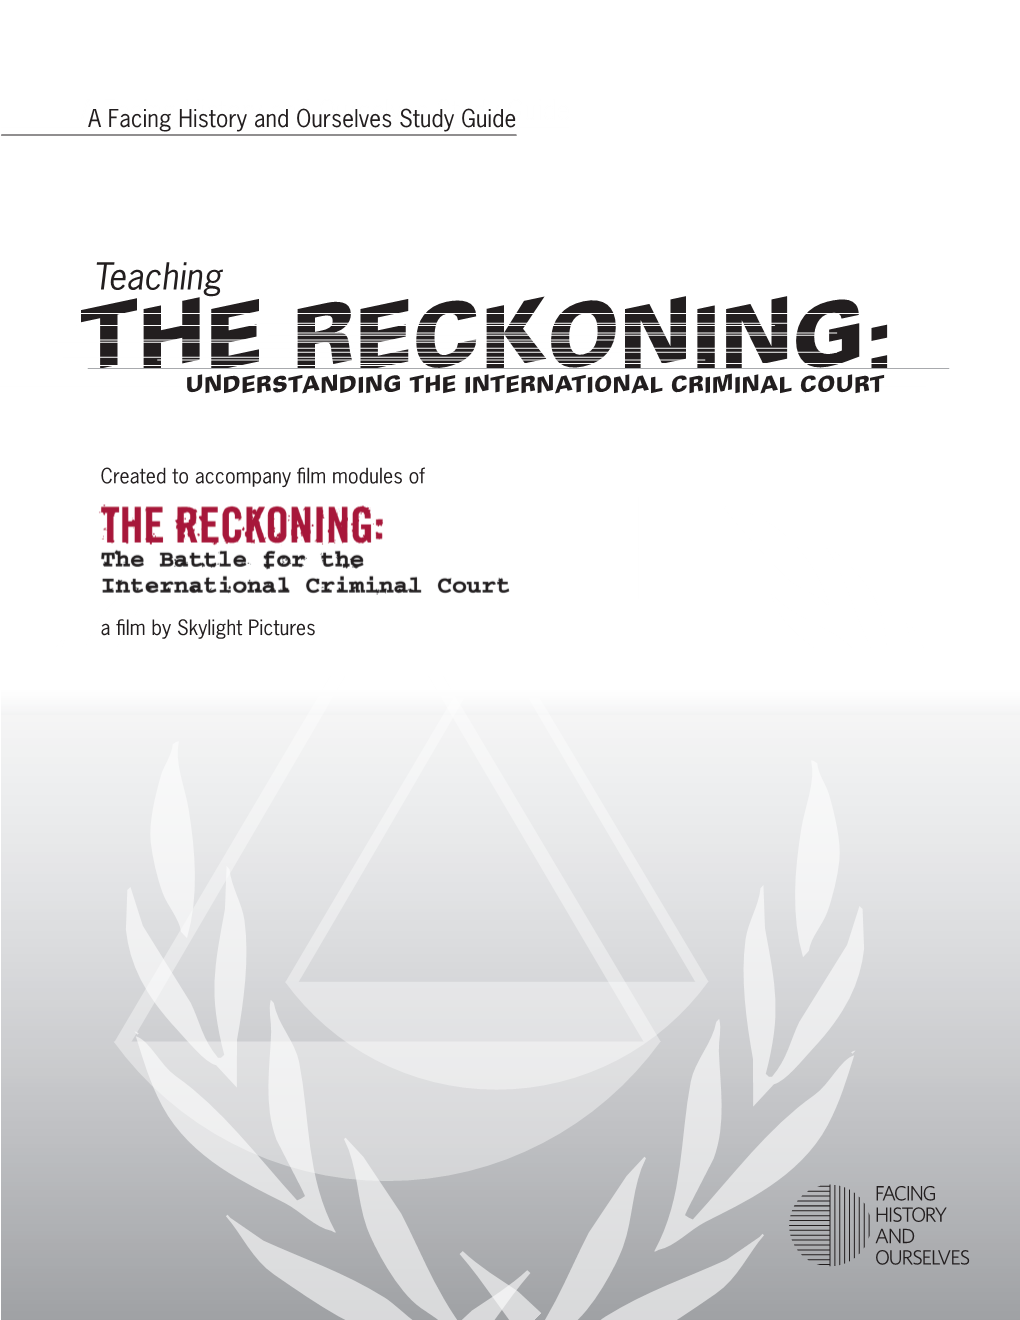 The Reckoning: Understanding the International Criminal Court